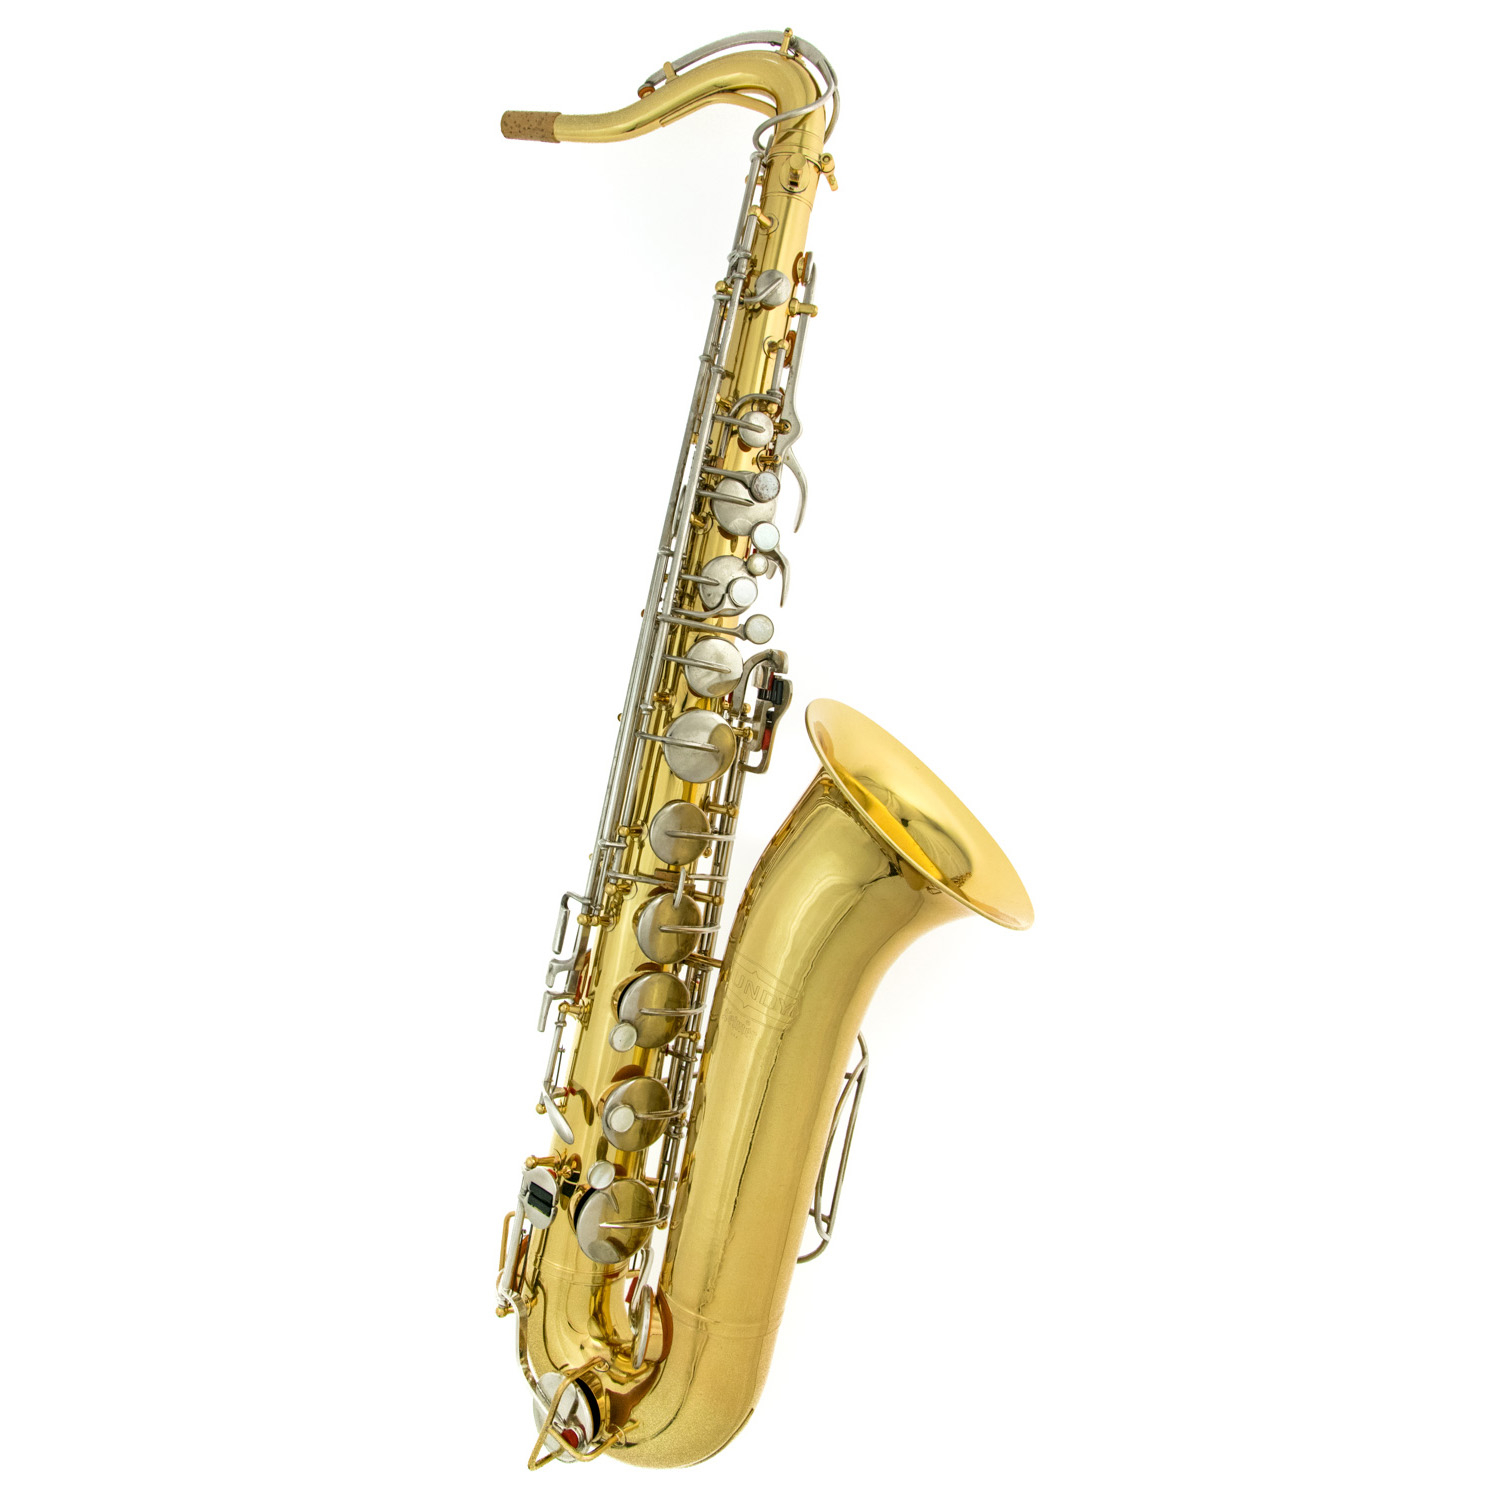 Vintage Bundy Tenor Saxophone | Nr. 546538